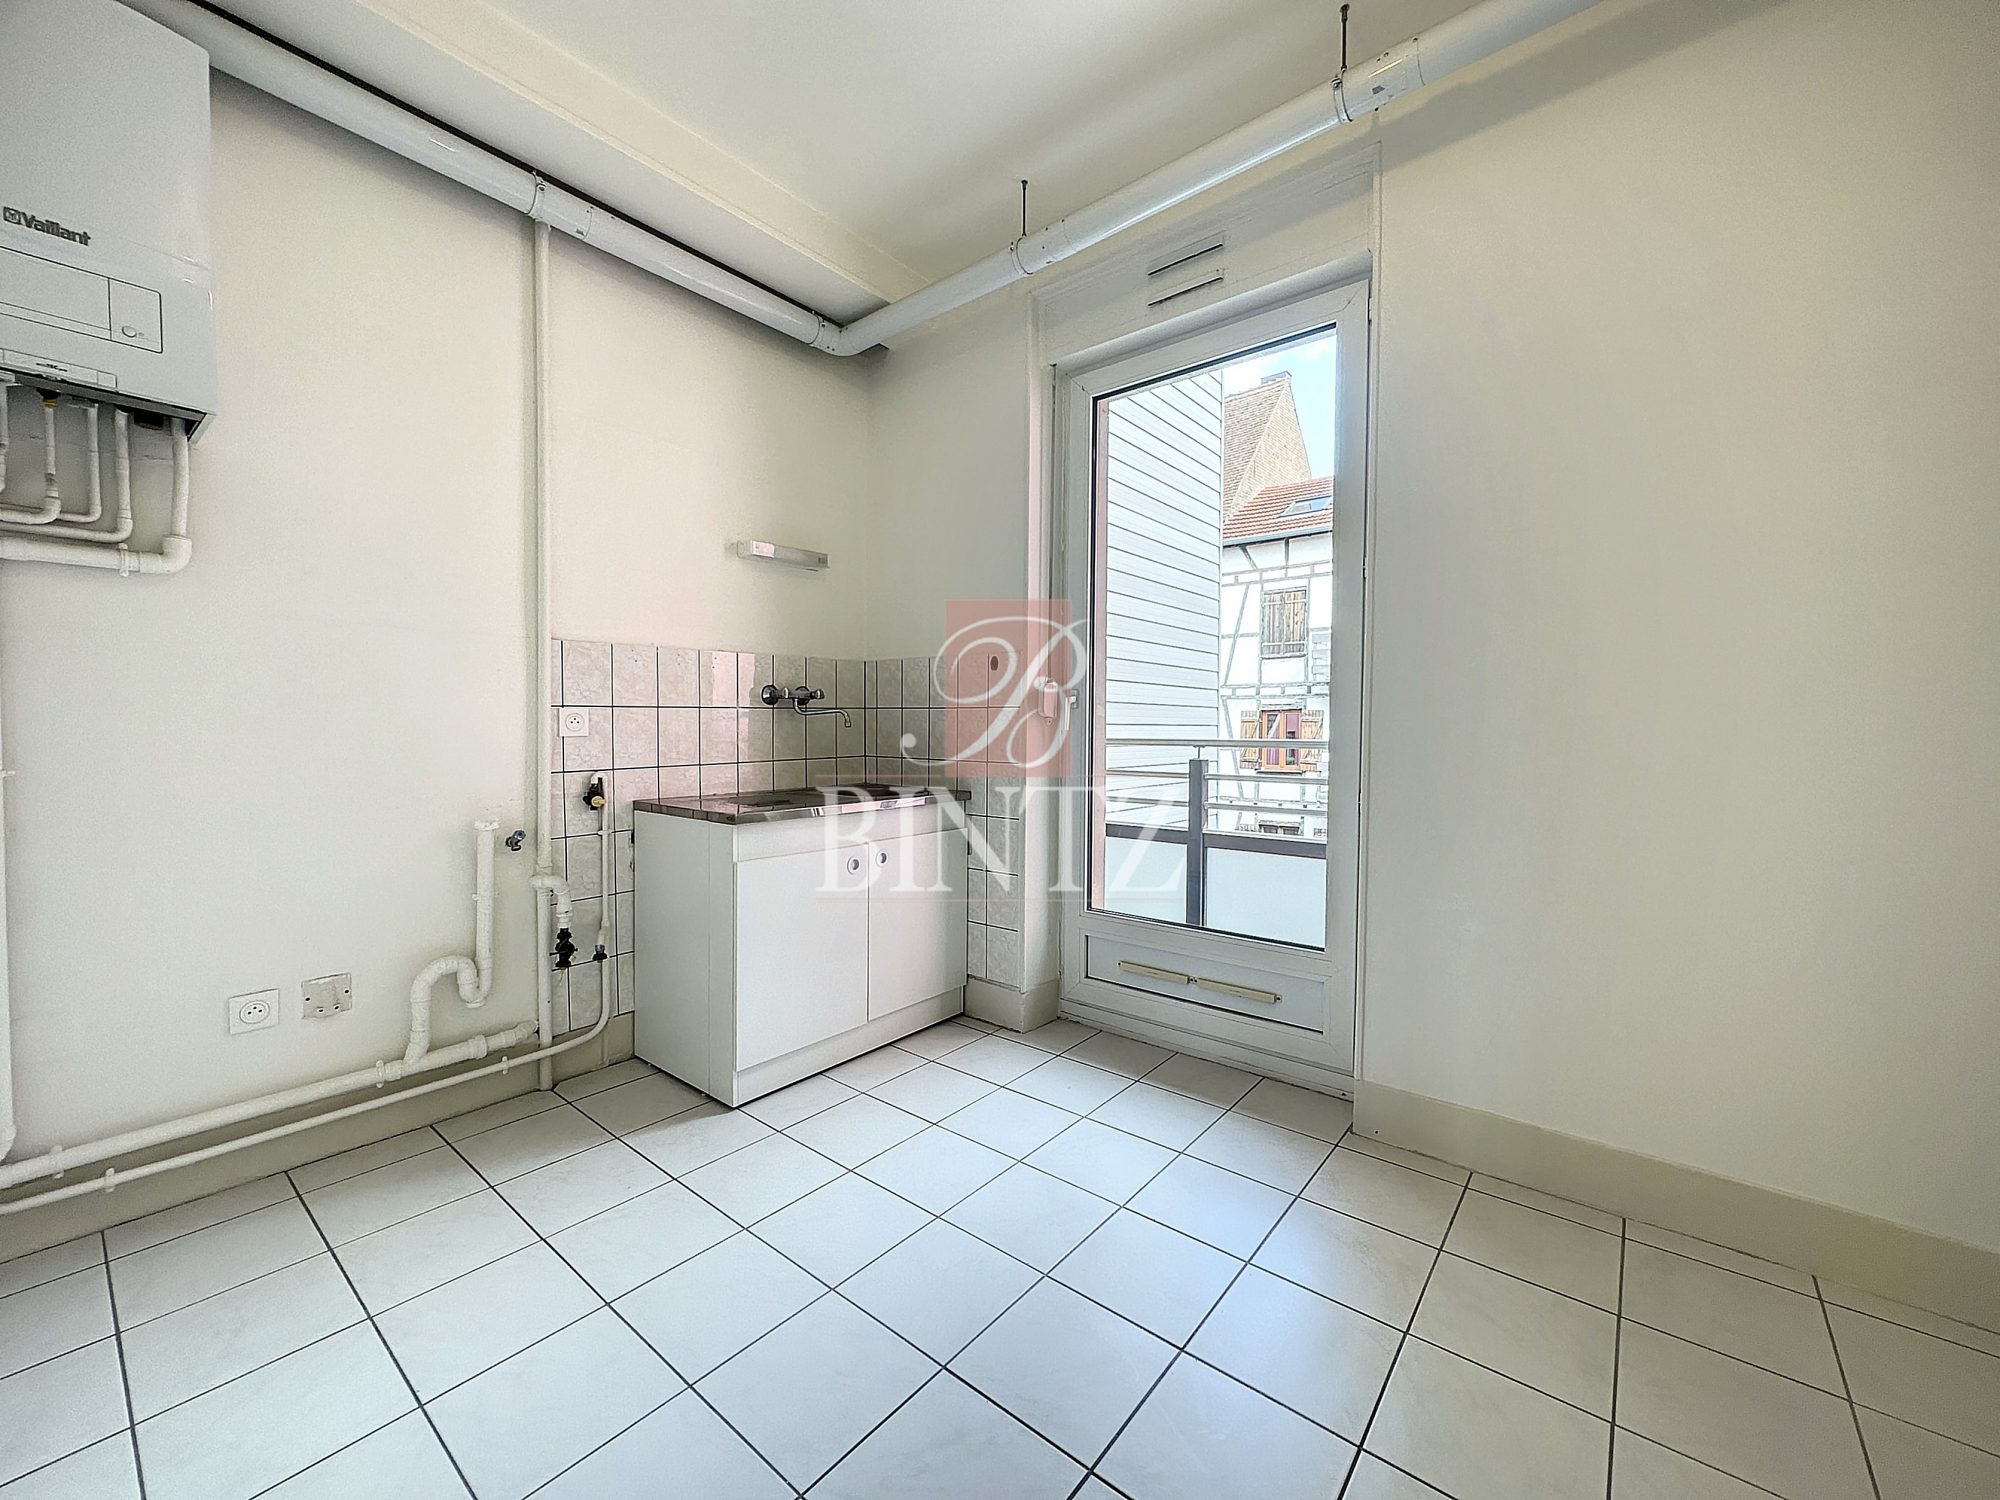 2P ROTONDE BALCON - location appartement Strasbourg - Bintz Immobilier - 4